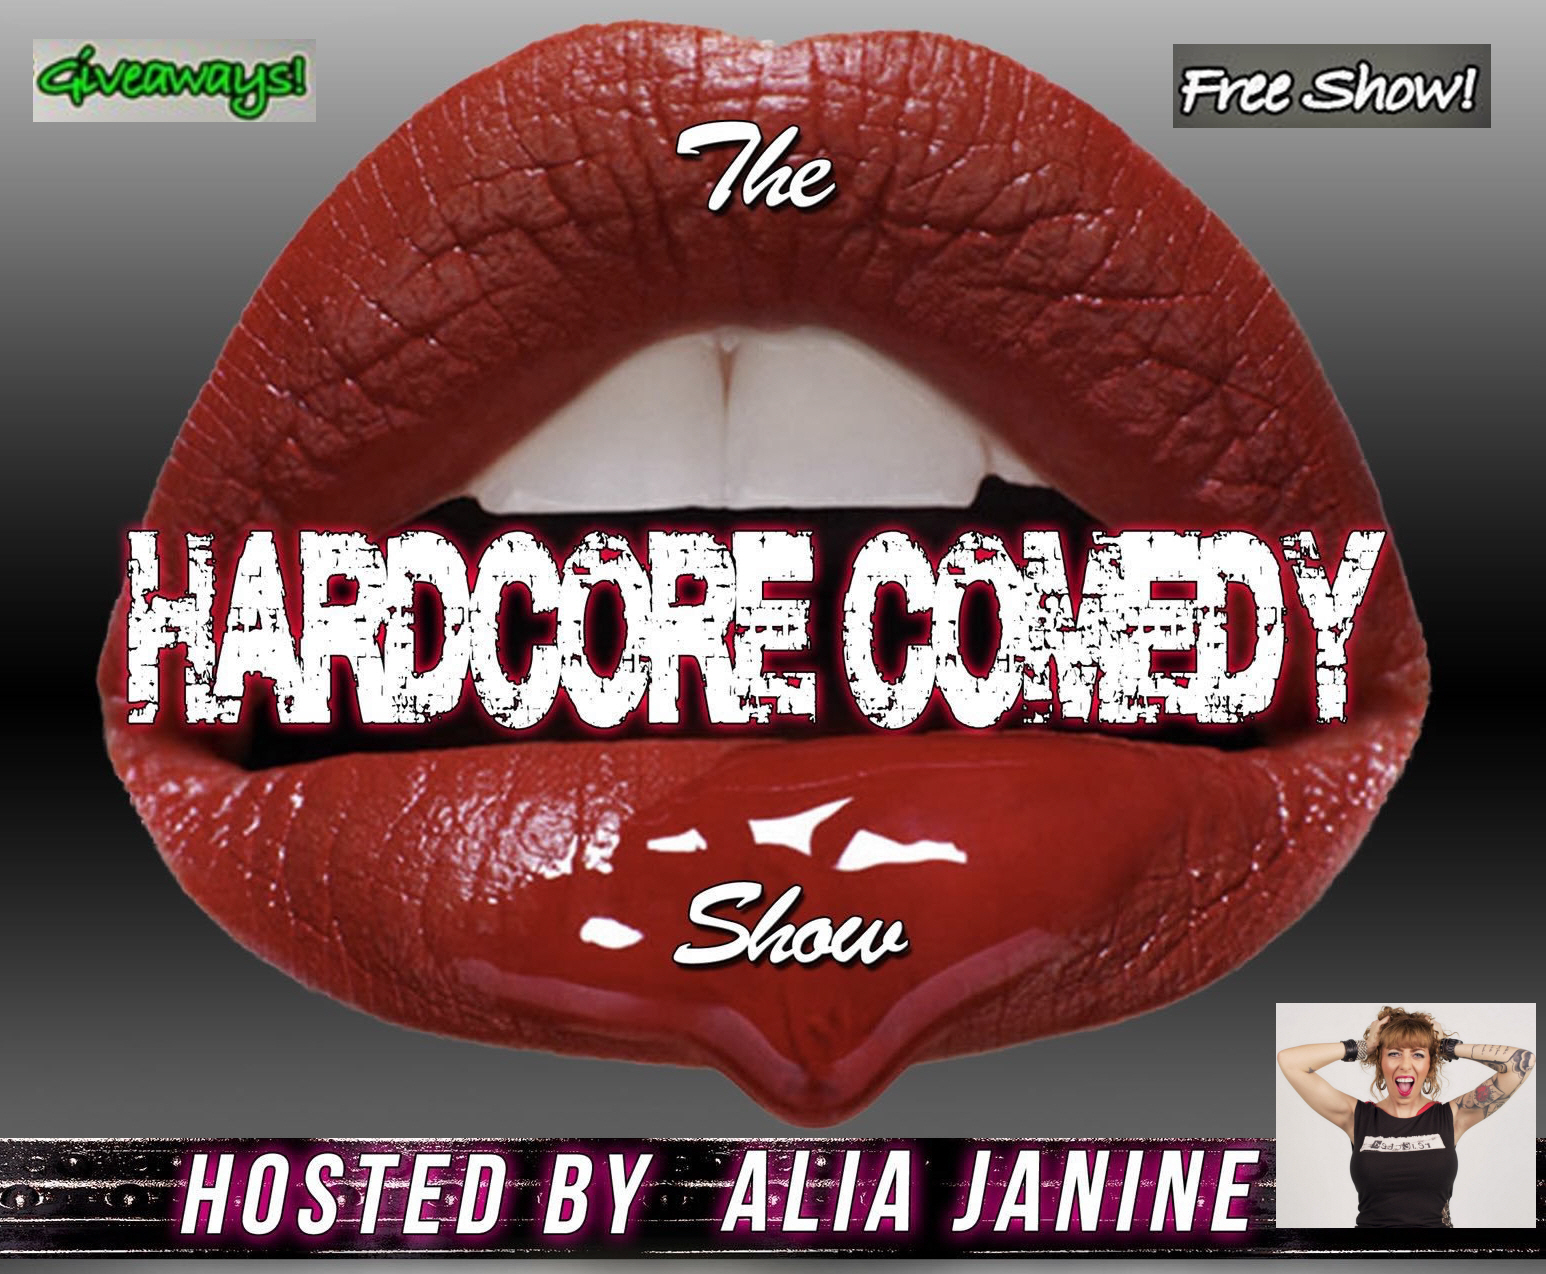 Alia Janine: "The Hardcore Comedy Show"